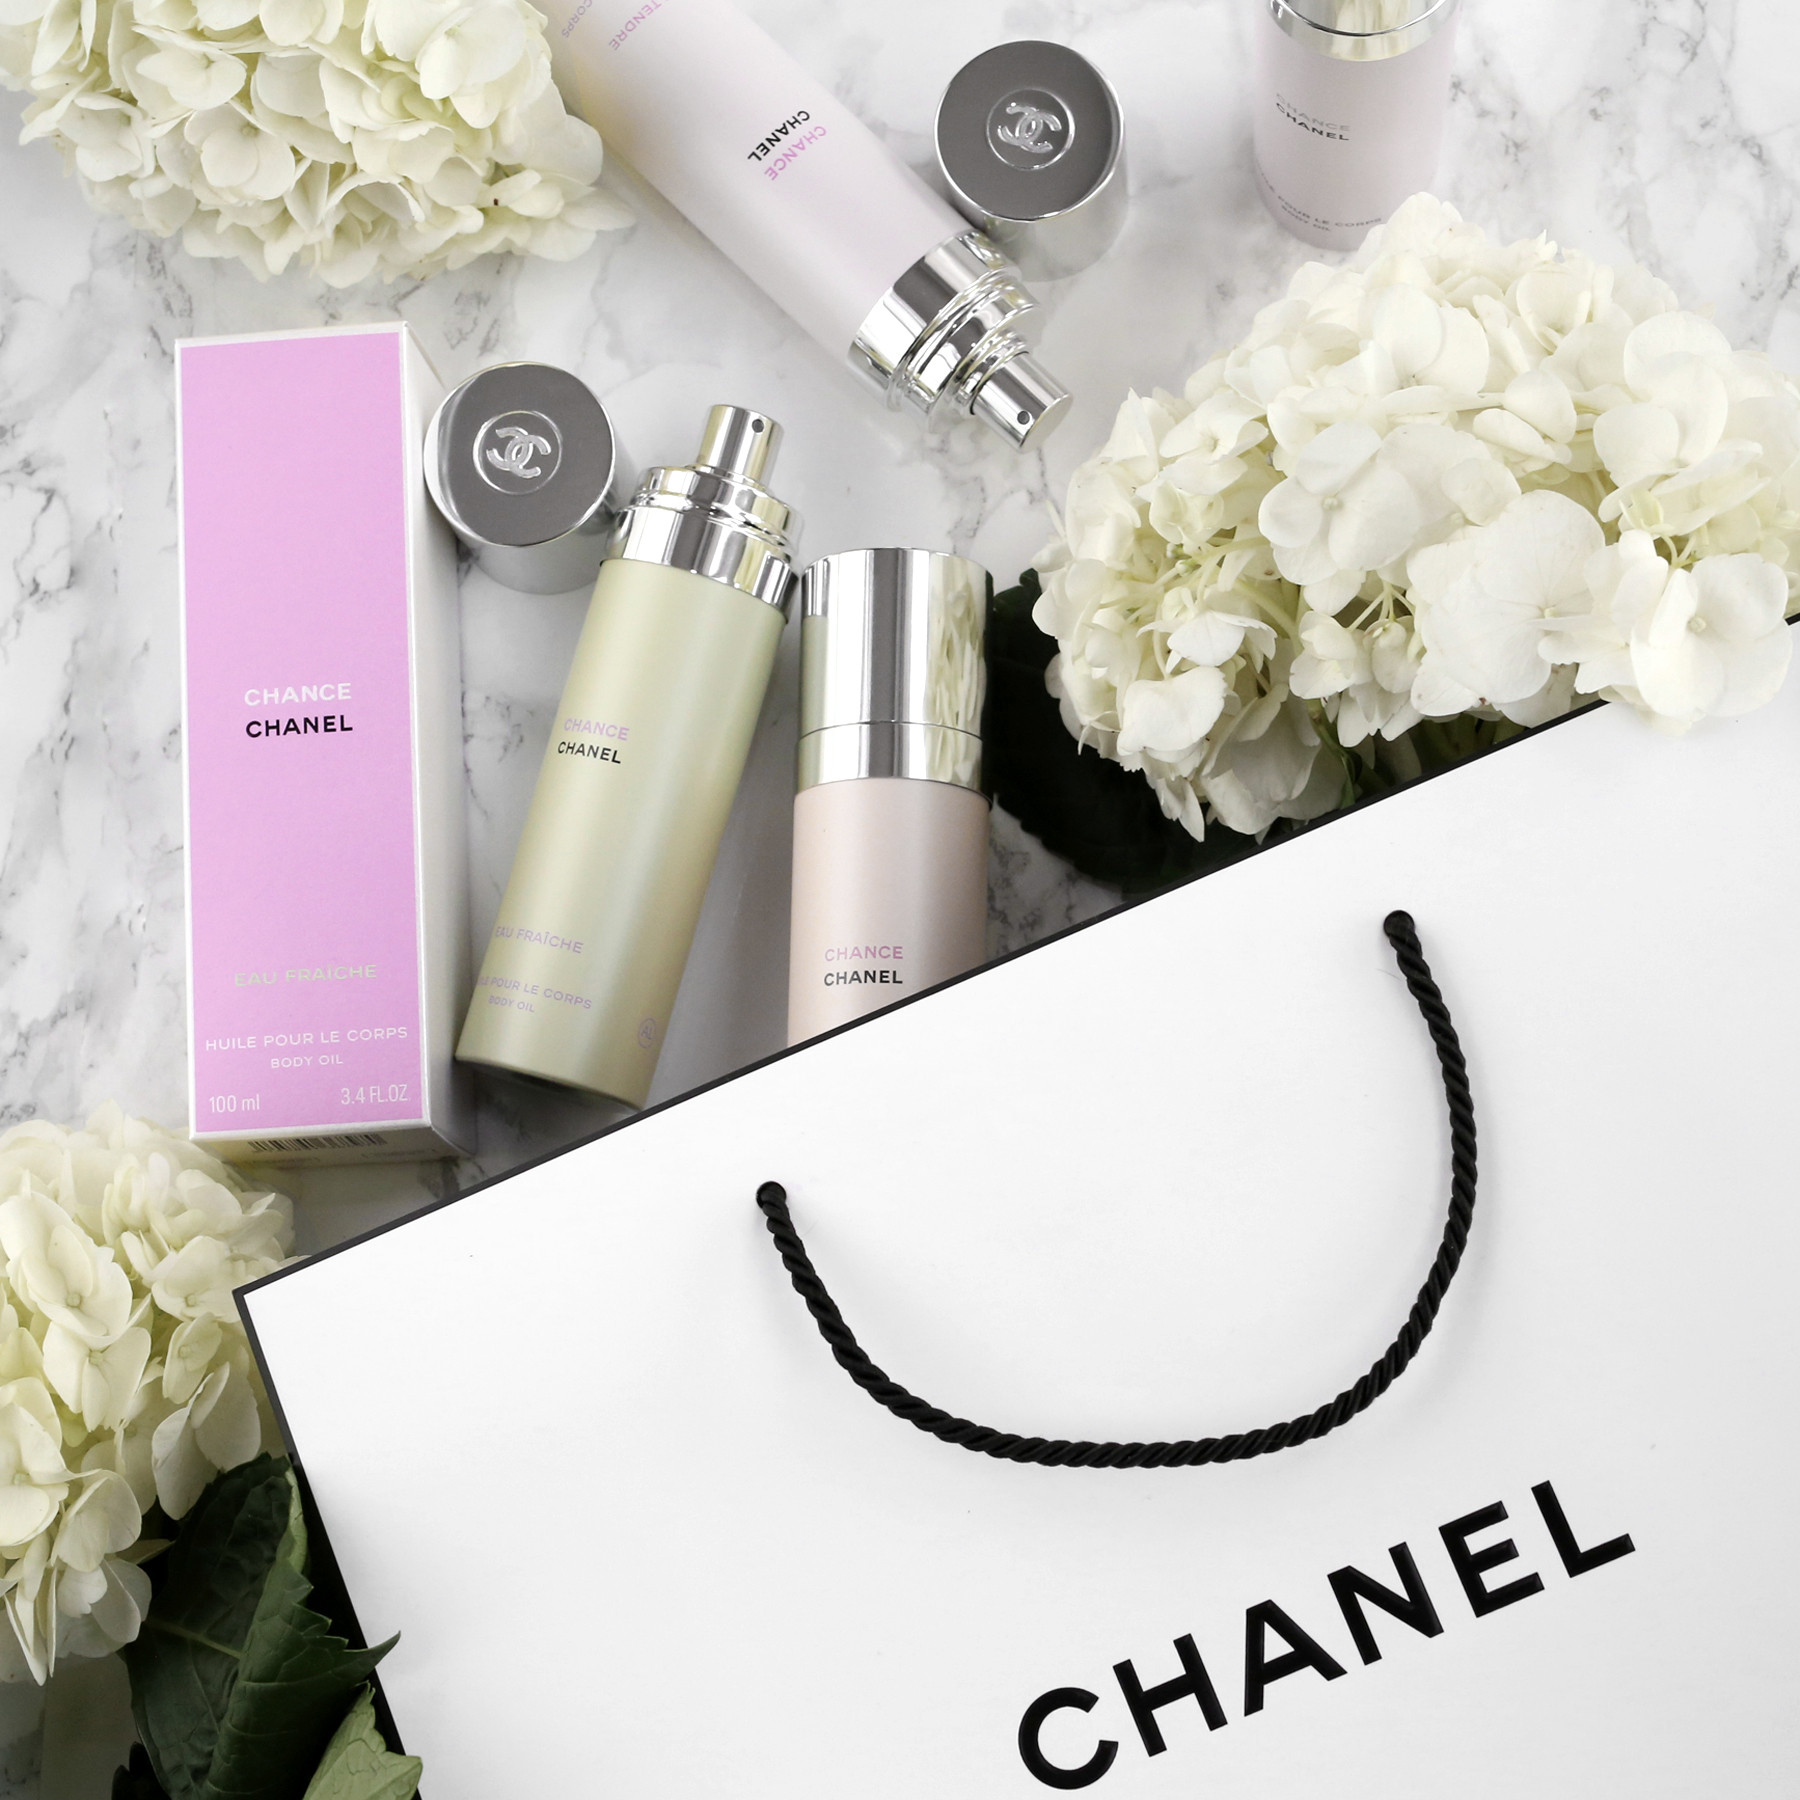 Shop Chanel Chance Original online